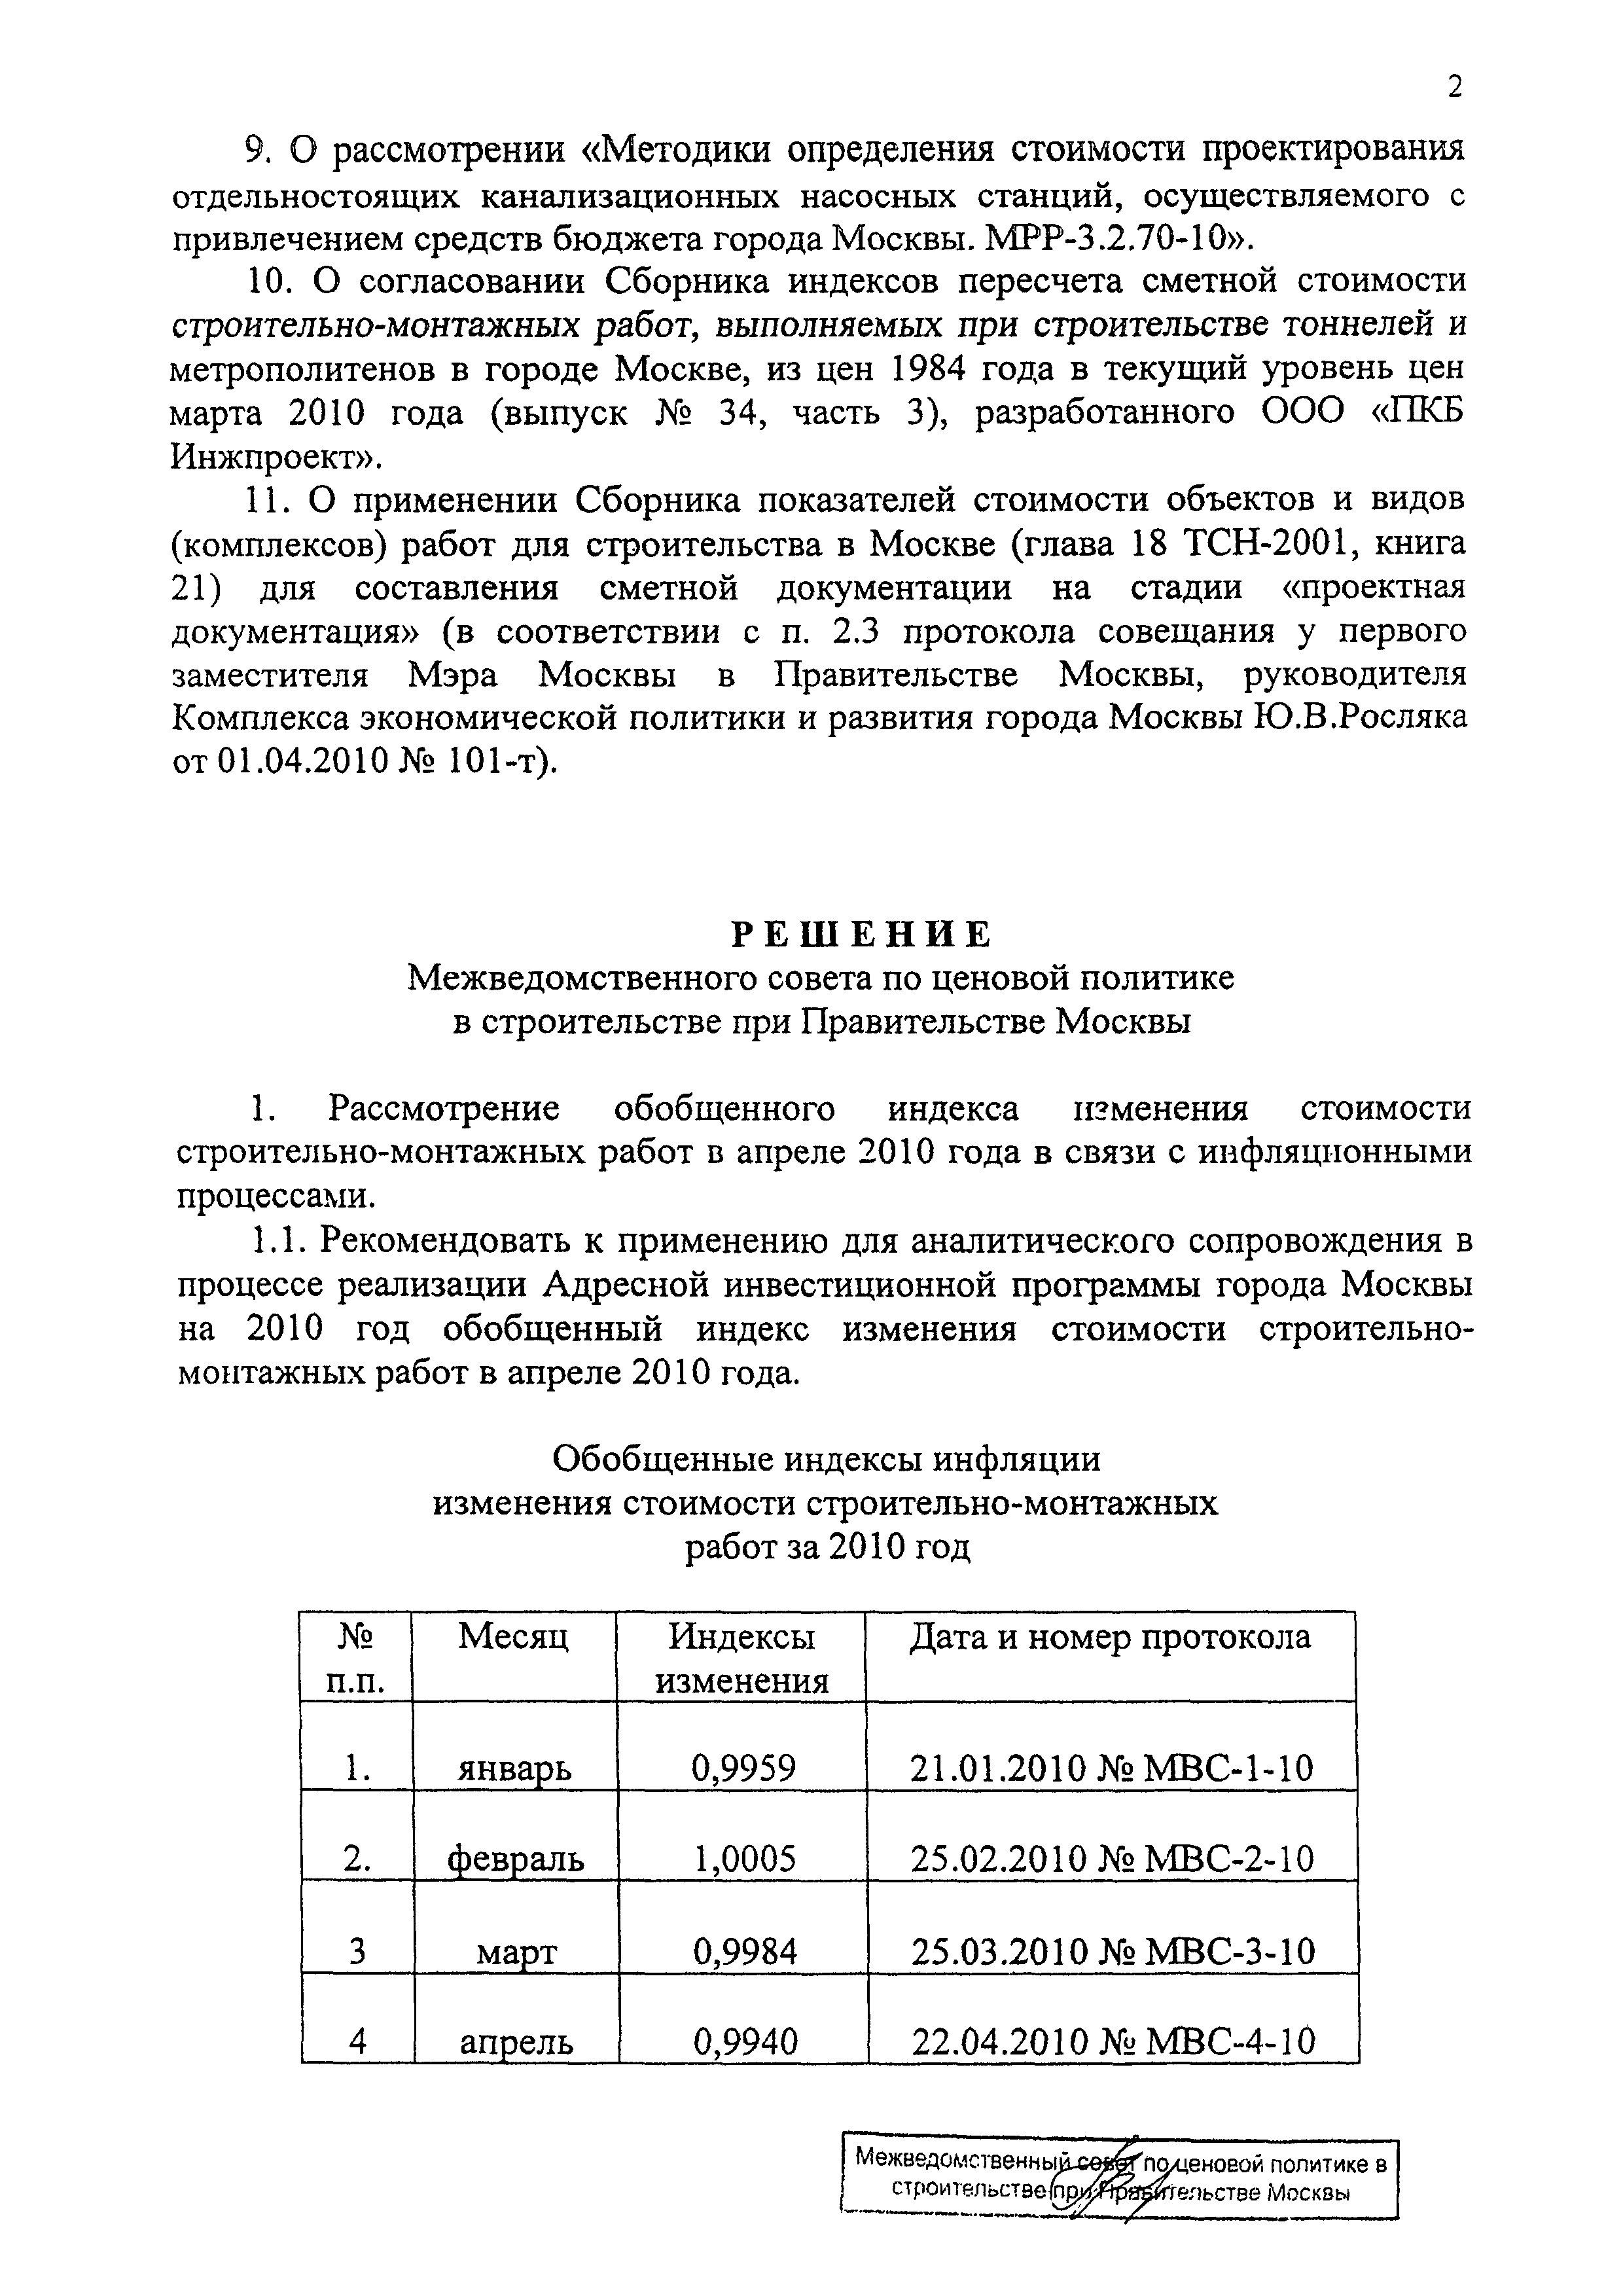 Протокол МВС-4-10